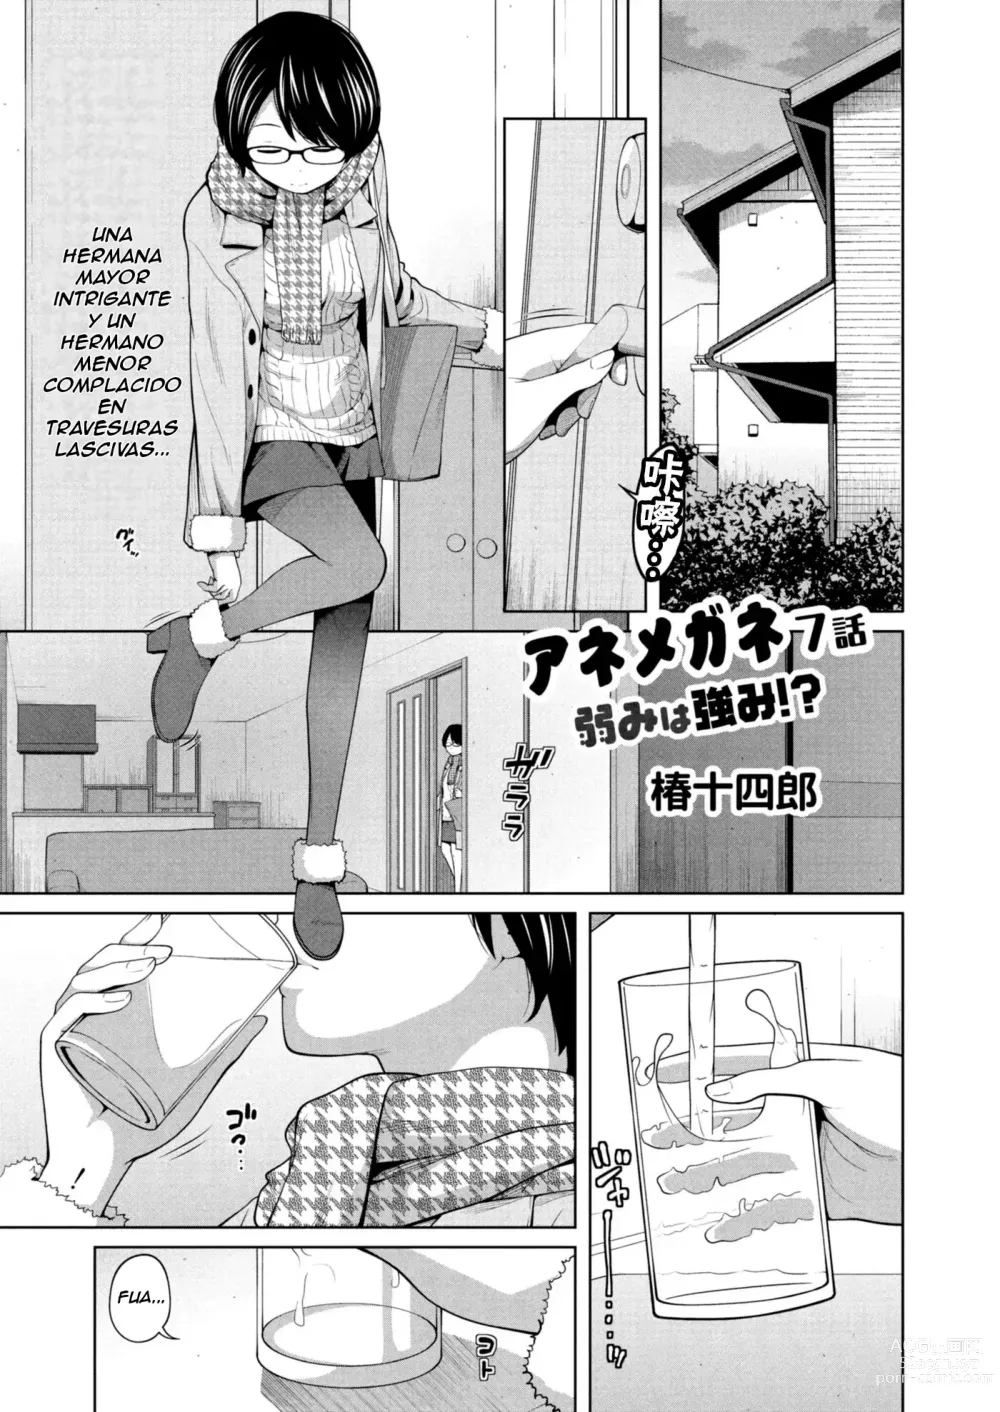 Page 1 of manga Ane Megane 7-wa Yowami wa Tsuyomi!?